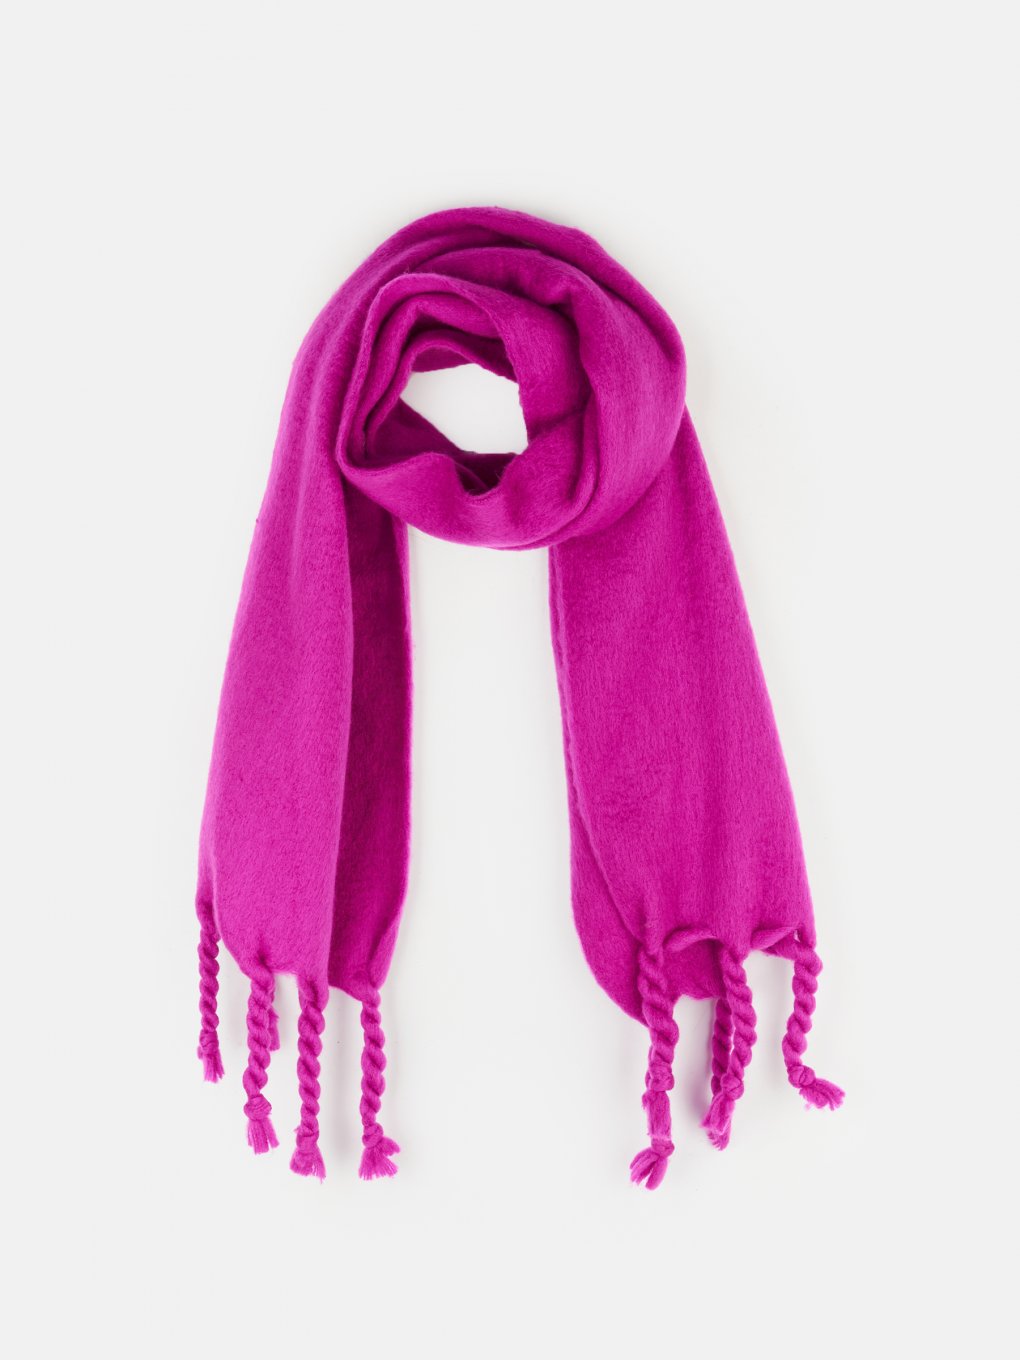 Cozy scarf